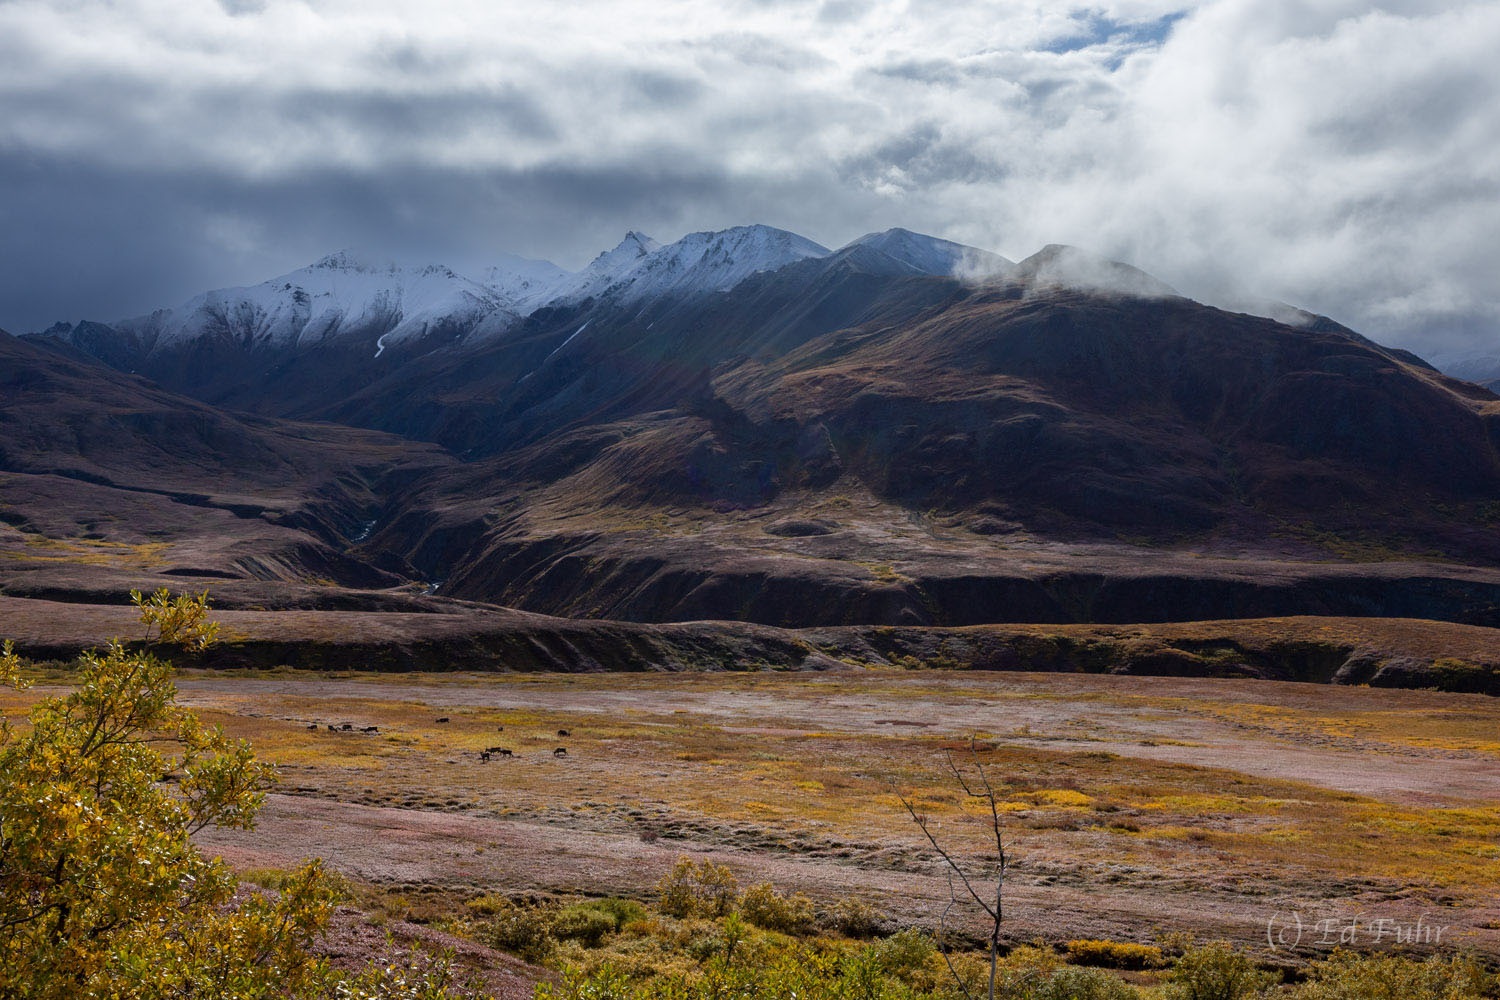 A herd of carribou graze in this valley below the Alaskan Range.